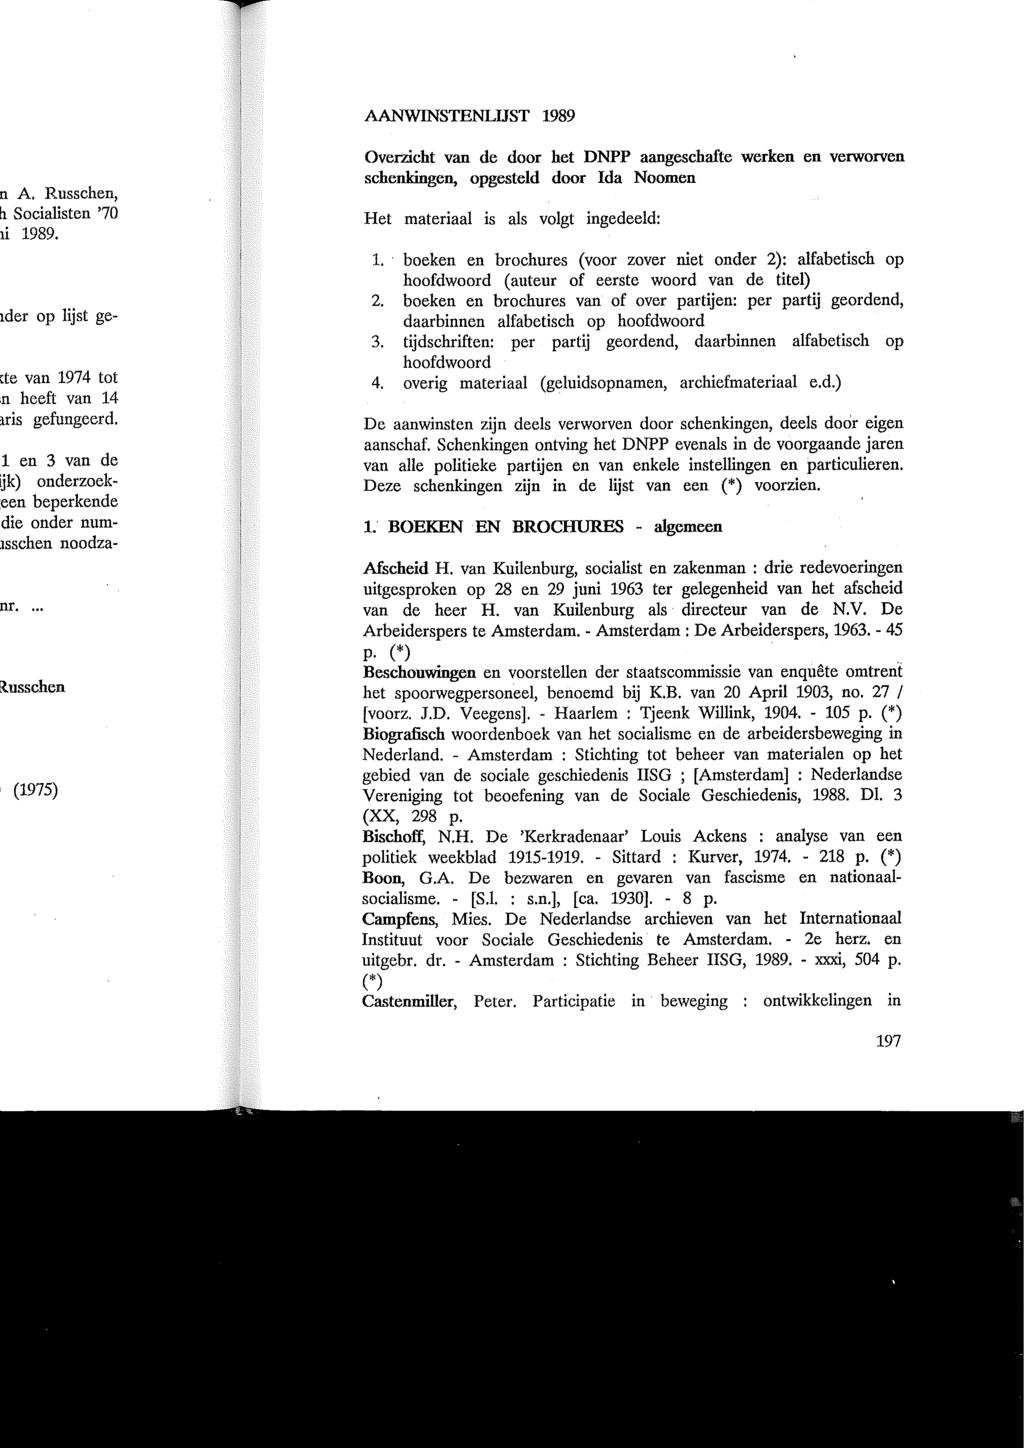 familie emotioneel streng Jaarboek Documentatiecentrum Nederlandse Politieke Partijen 1989 Voerman,  Gerrit; Lucardie, Anthonie - PDF Free Download